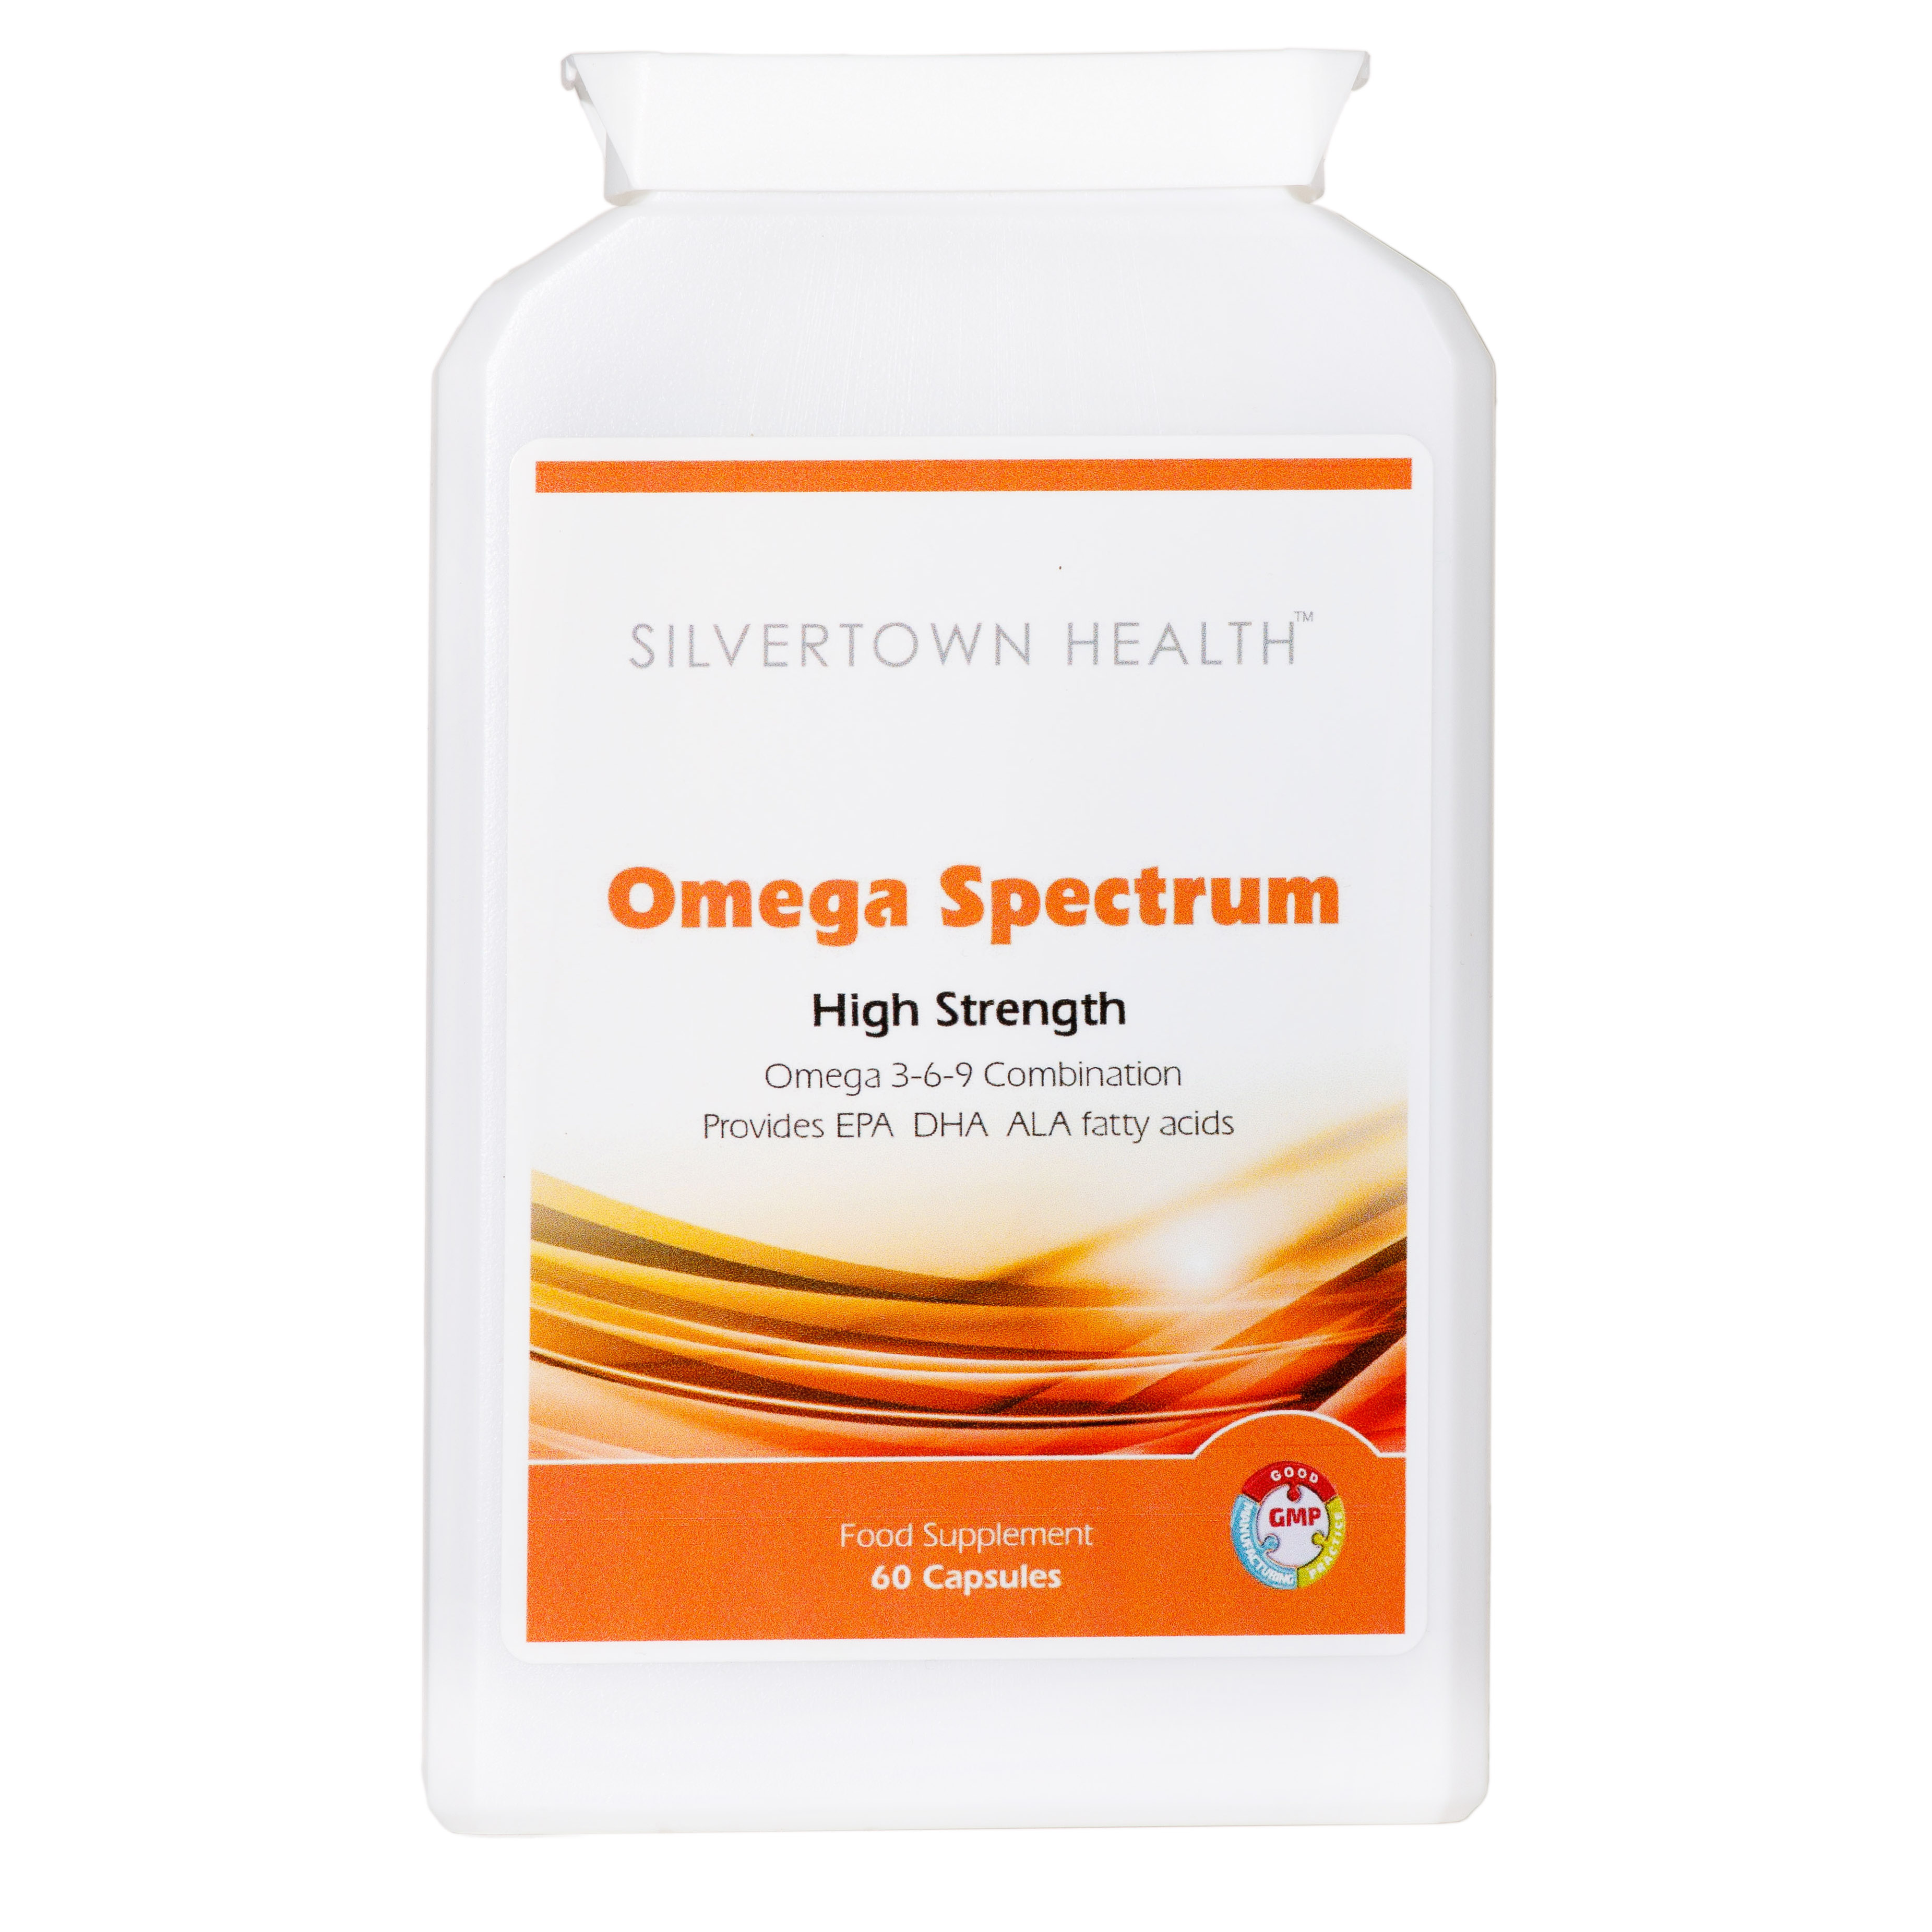 Omega Spectrum - Omega 3-6-9 - 60 Capsules - 1000mg